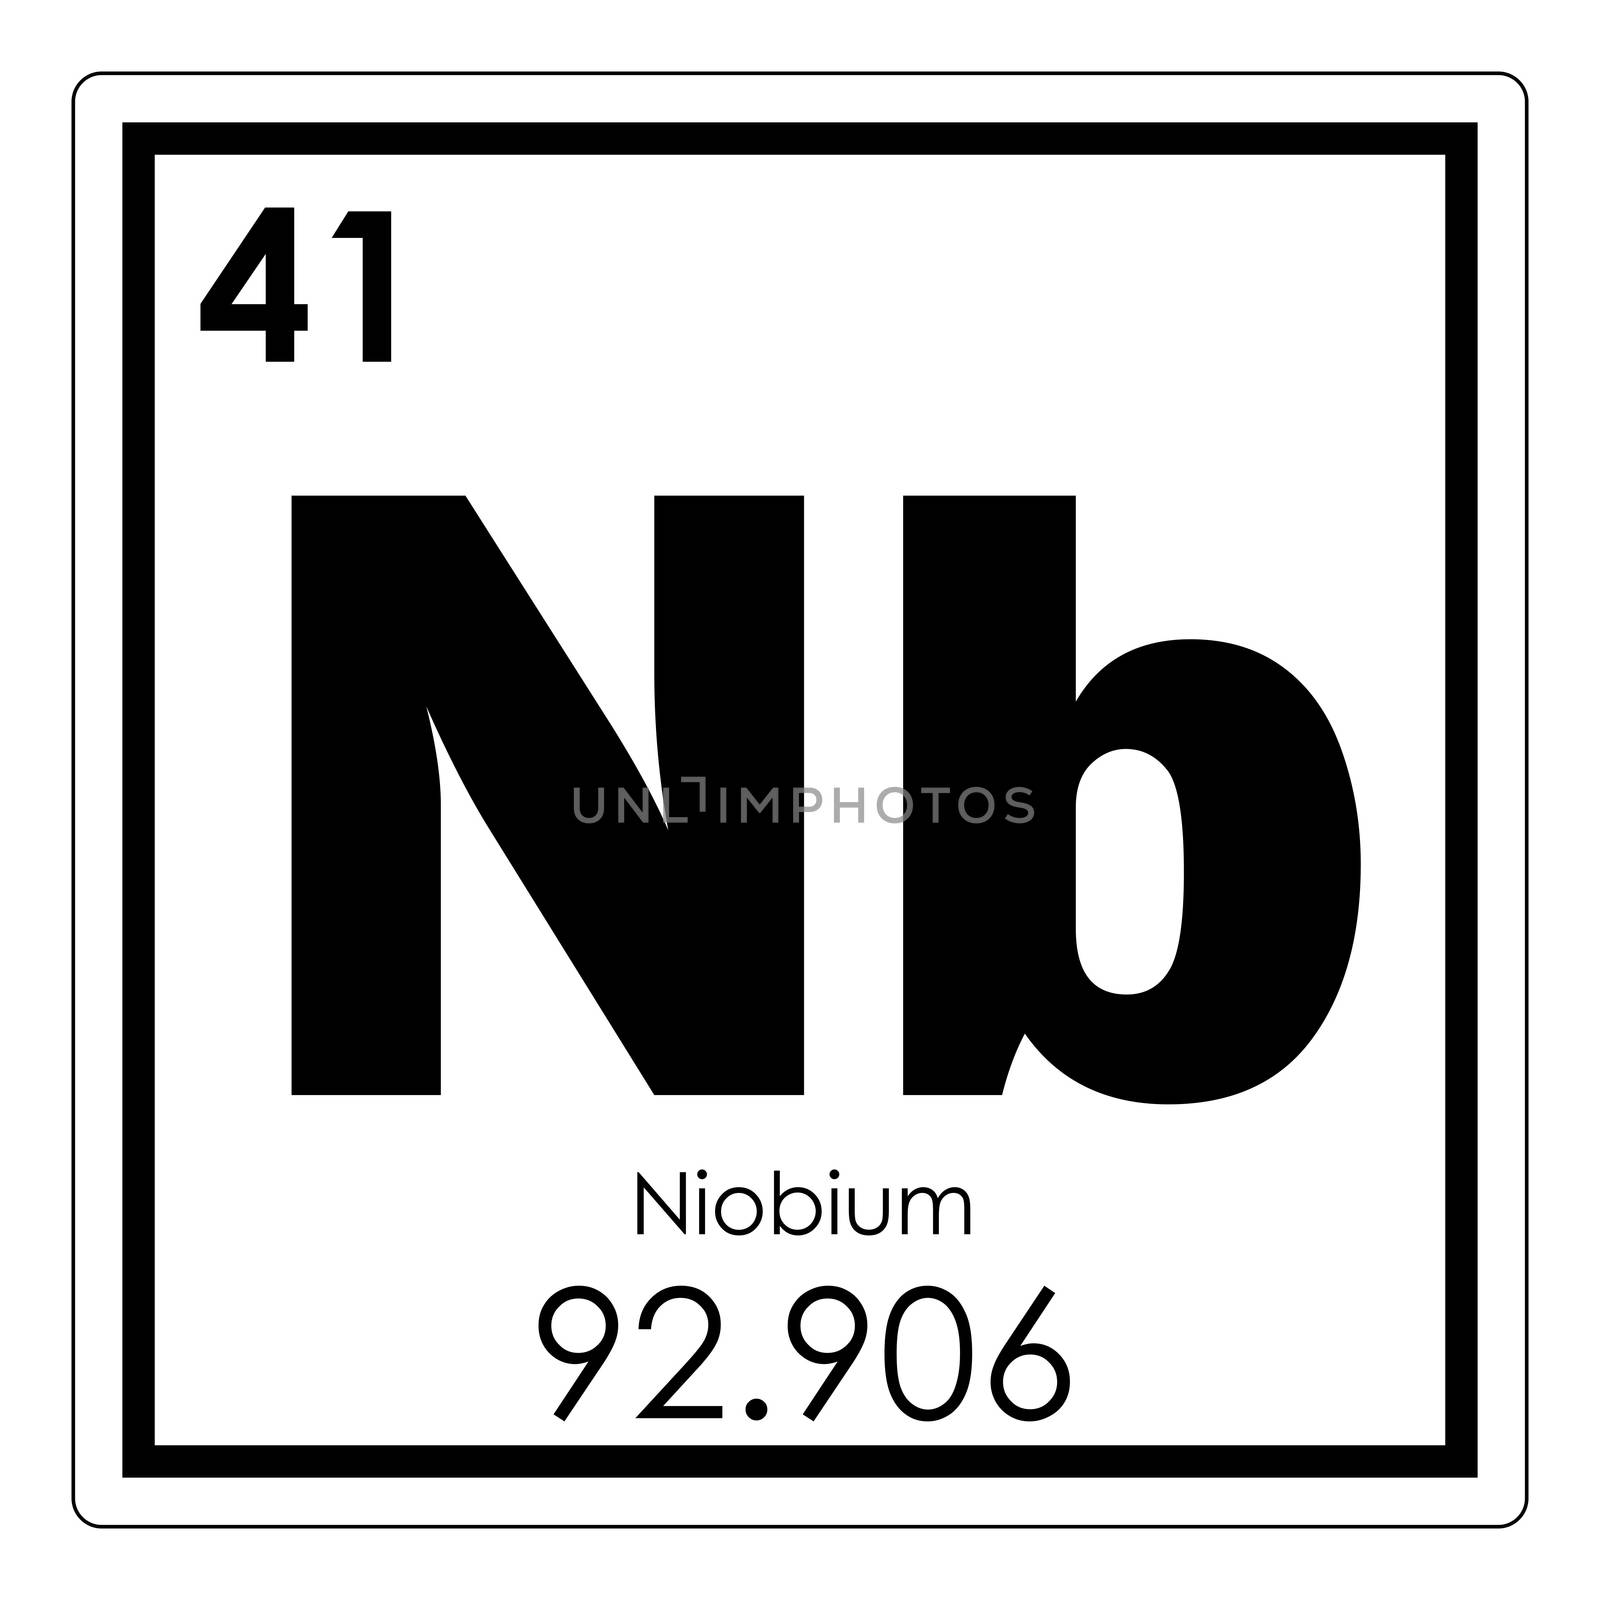 Niobium chemical element by tony4urban